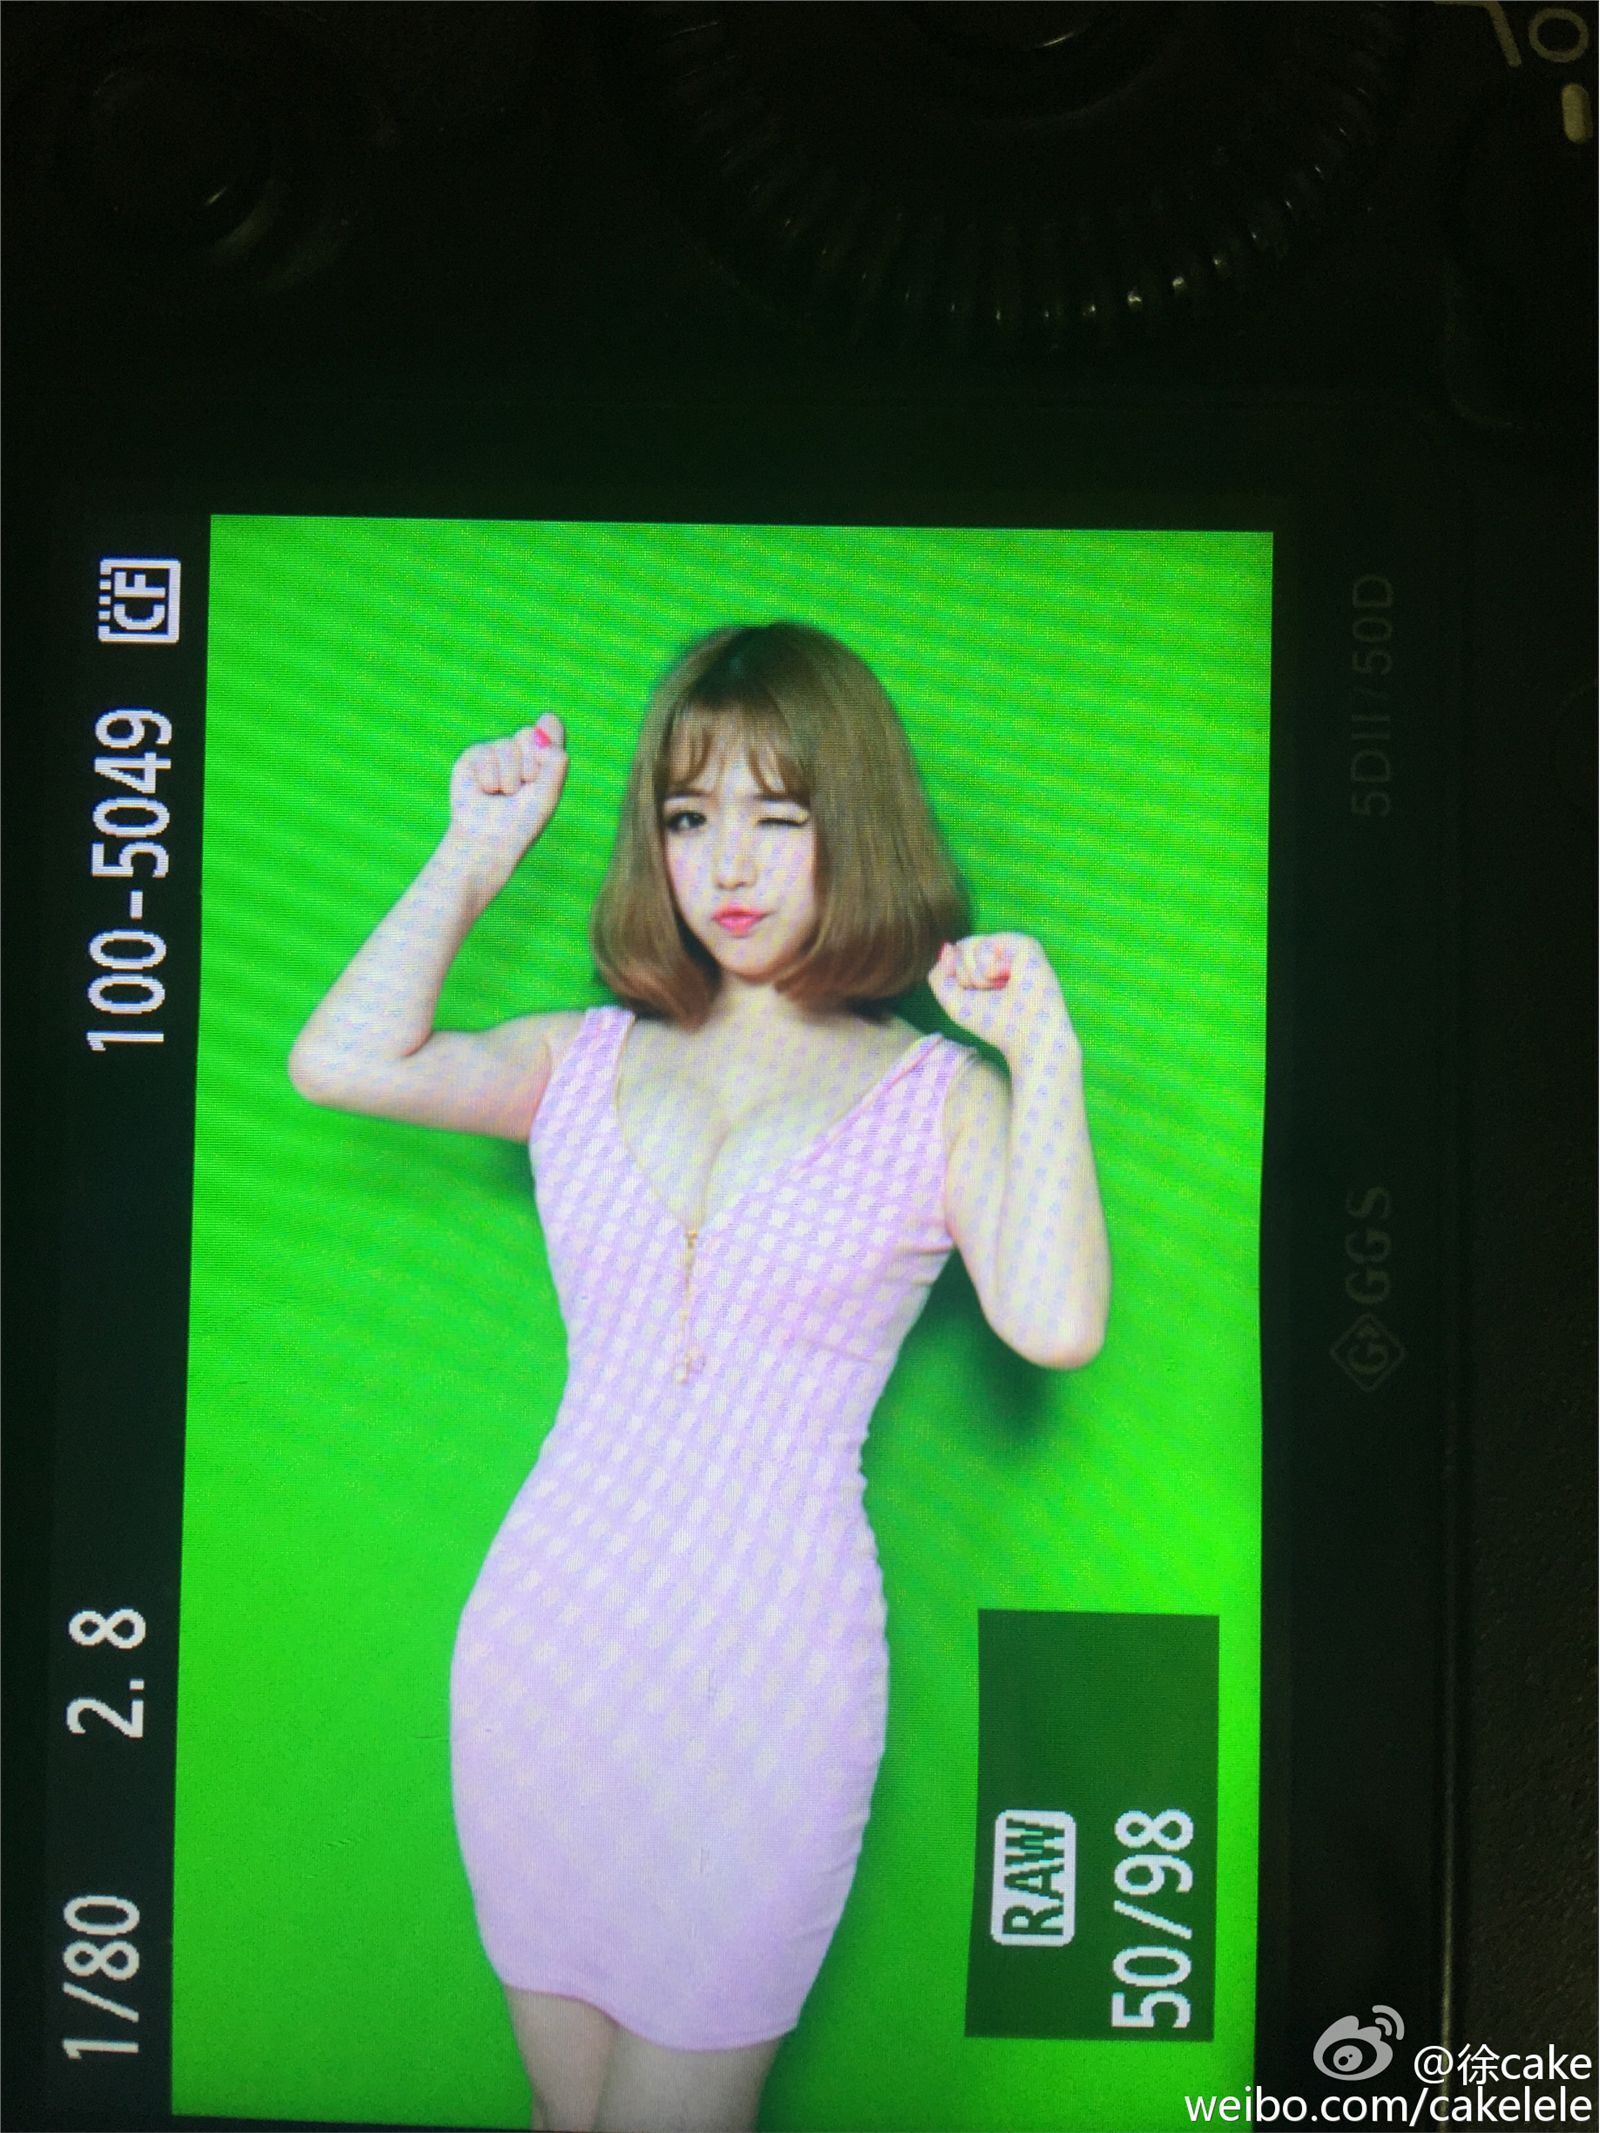 Shanghai 2015chinajoy model Ashley Weibo atlas 1